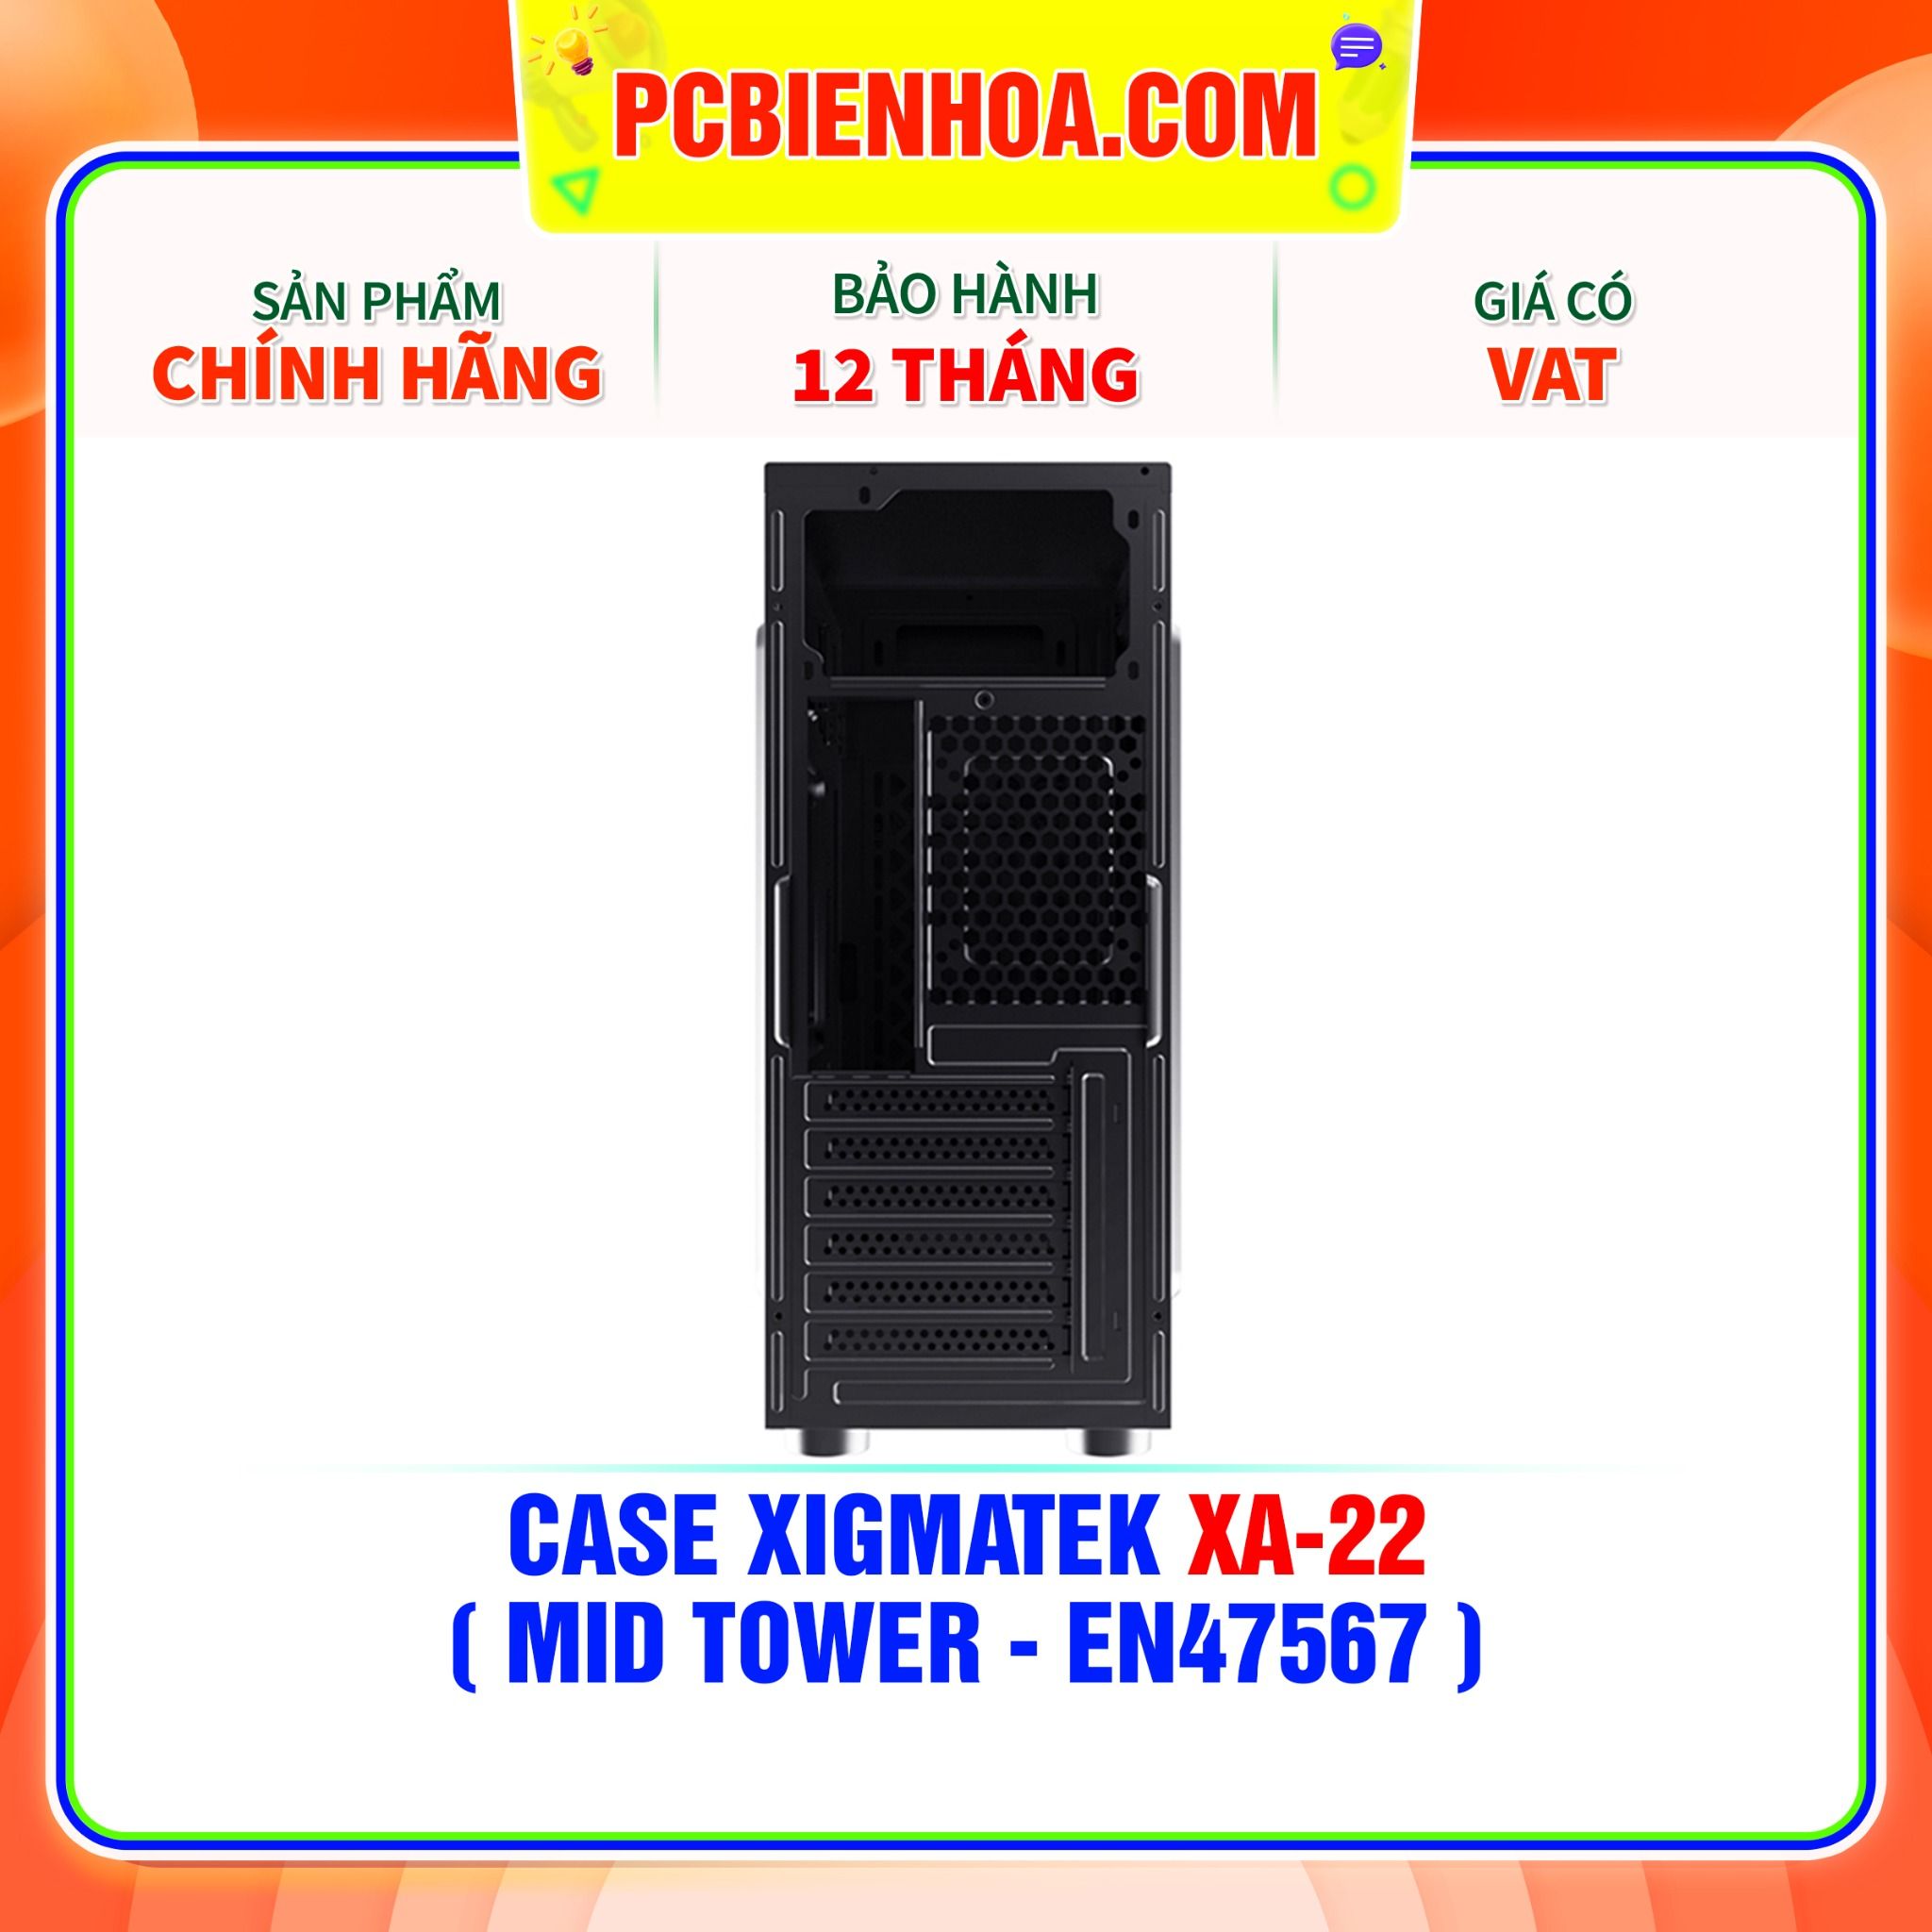  CASE XIGMATEK XA-22 ( MID TOWER - EN47567 ) 